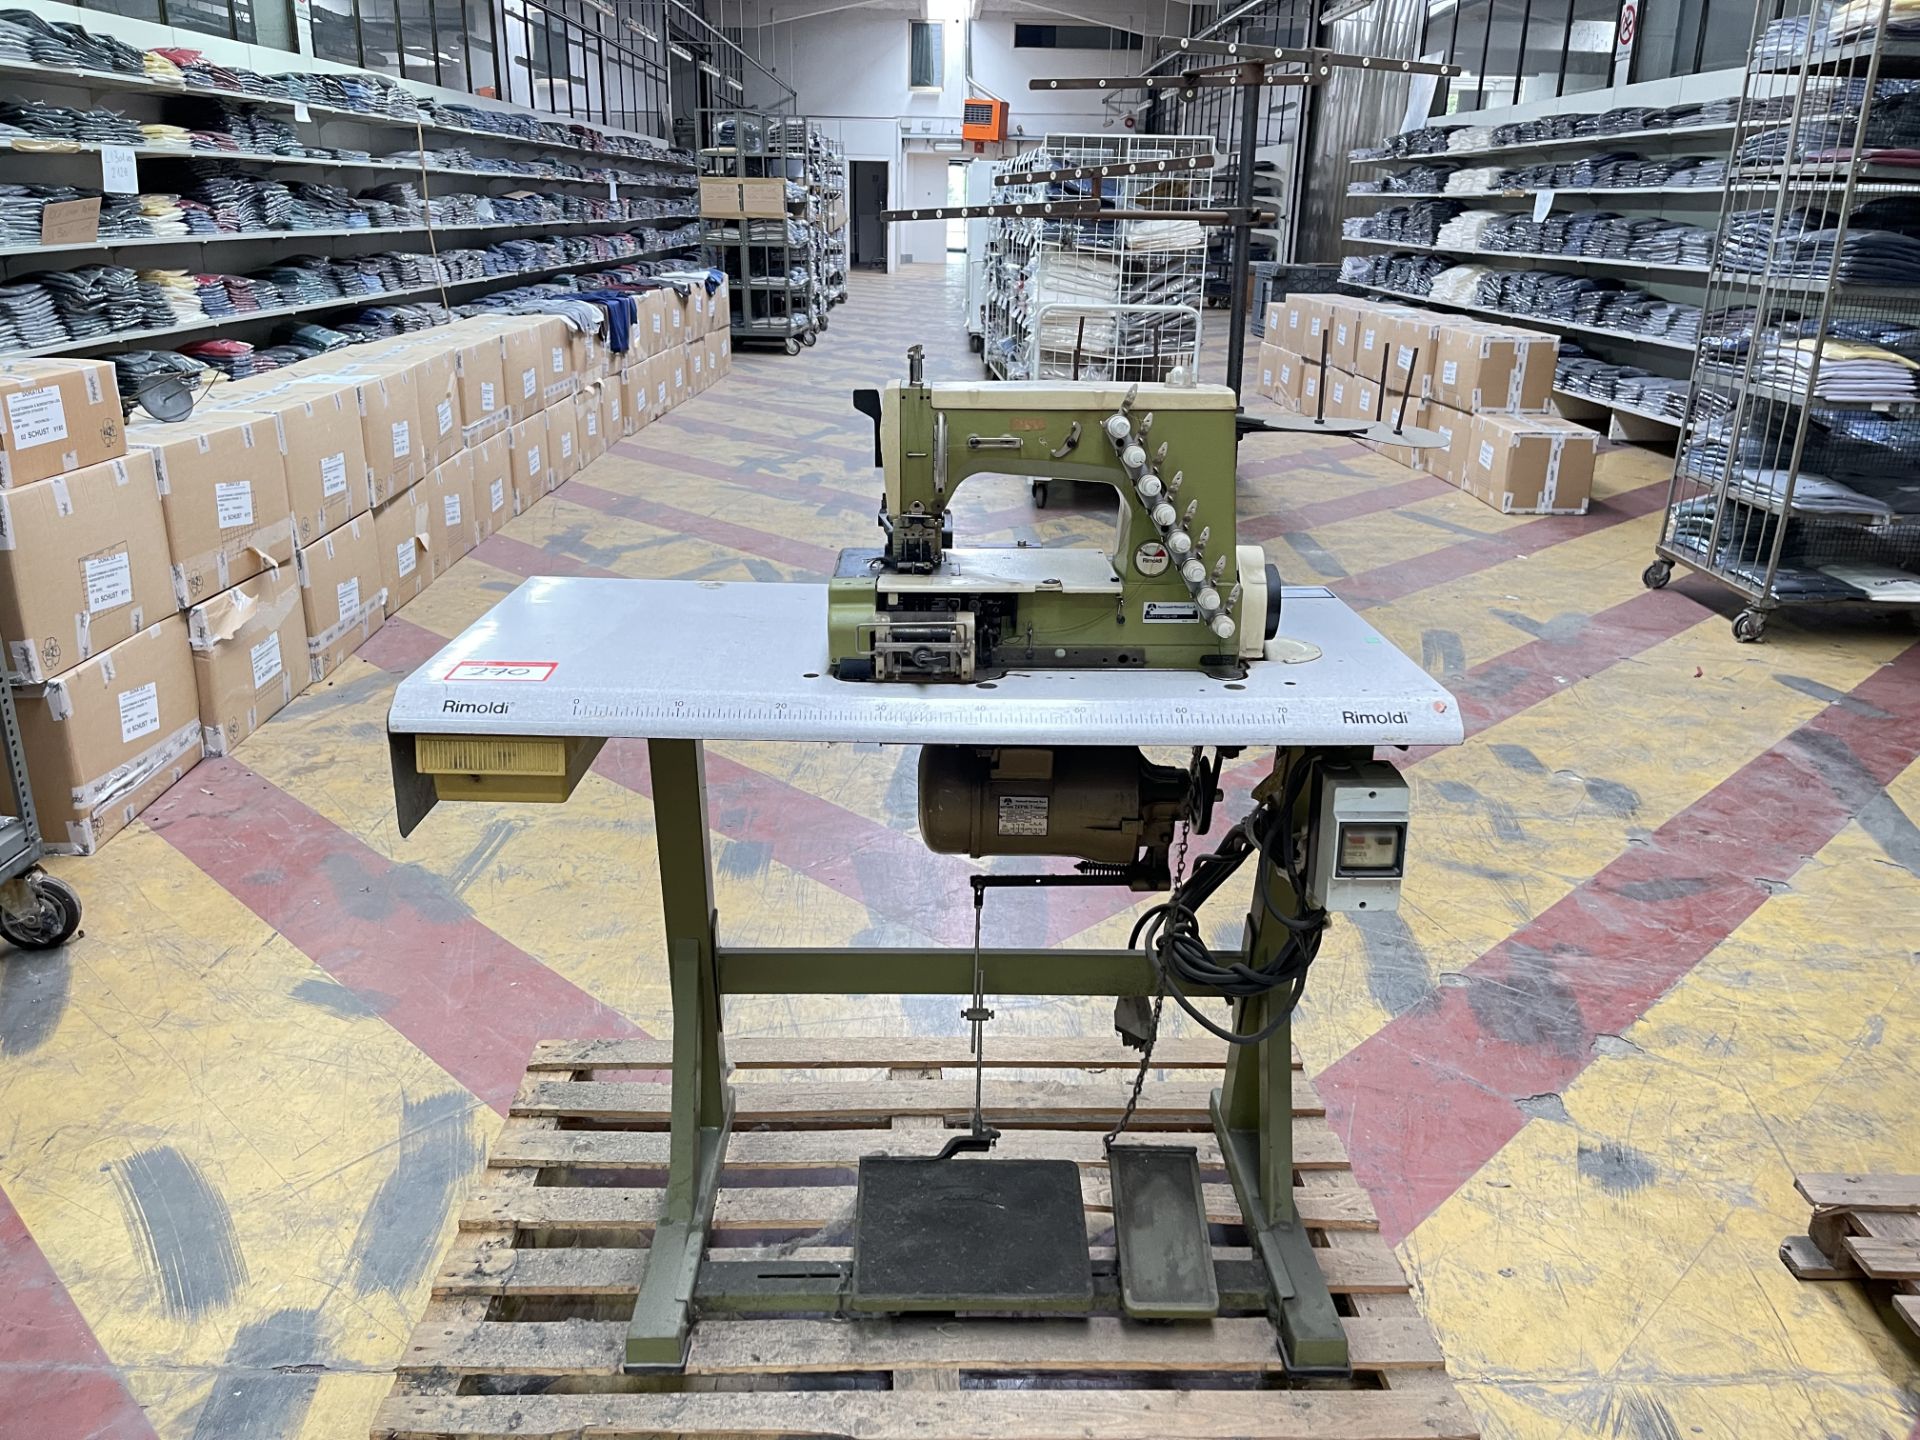 Rimoldi 264-11-4EL-09 Industrial Sewing Machine